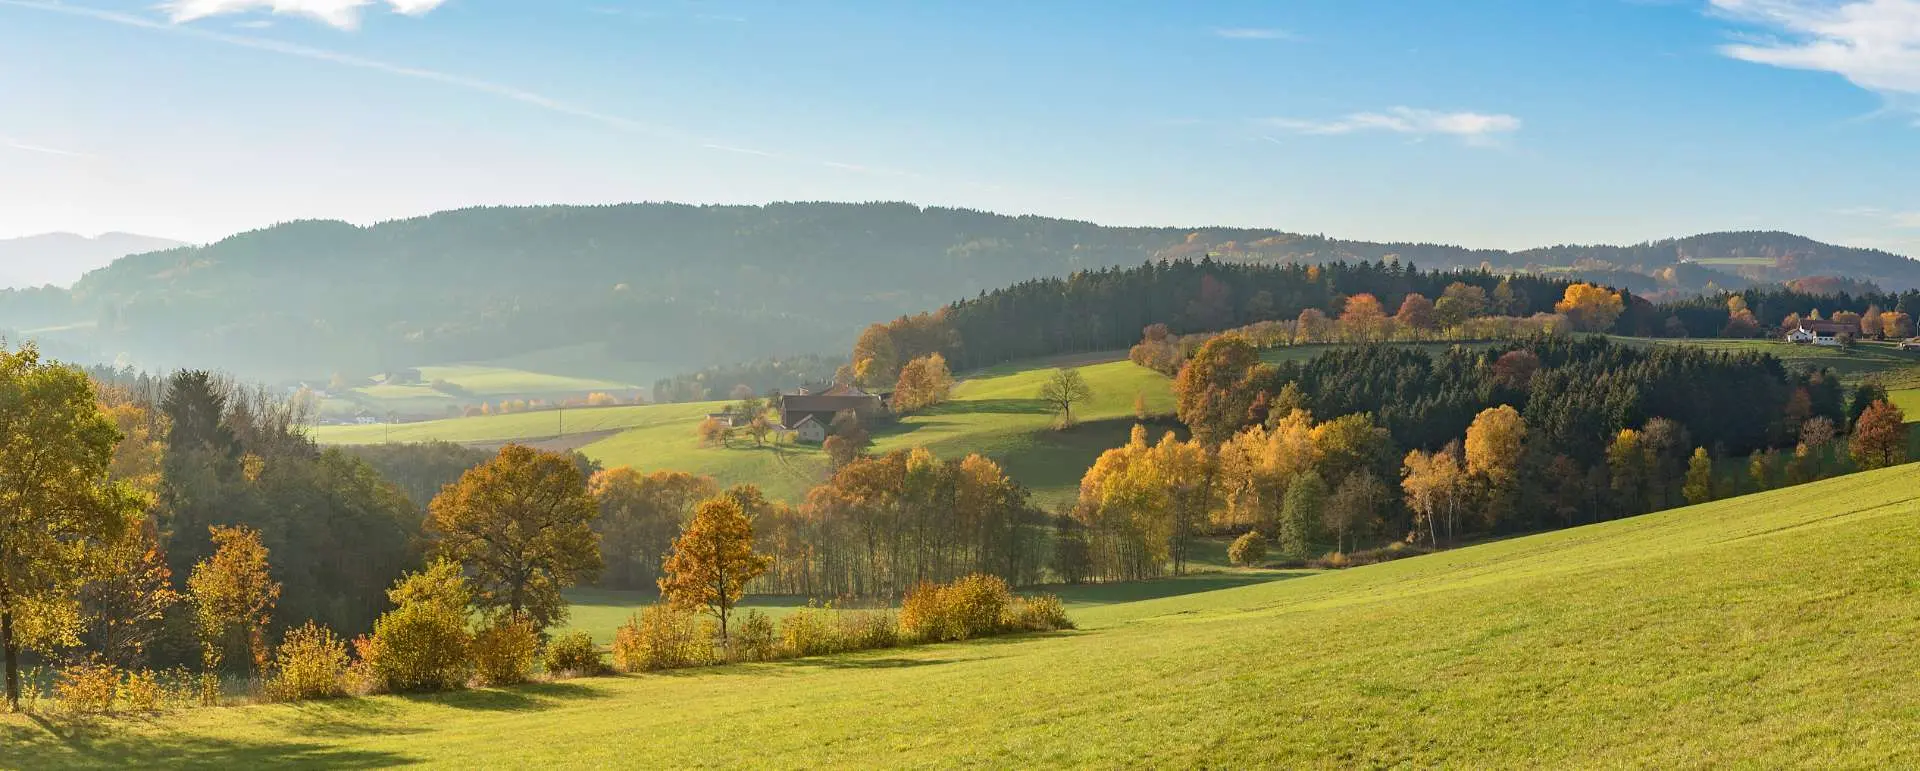 Lower Bavaria - the destination for classes seeking nature experiences